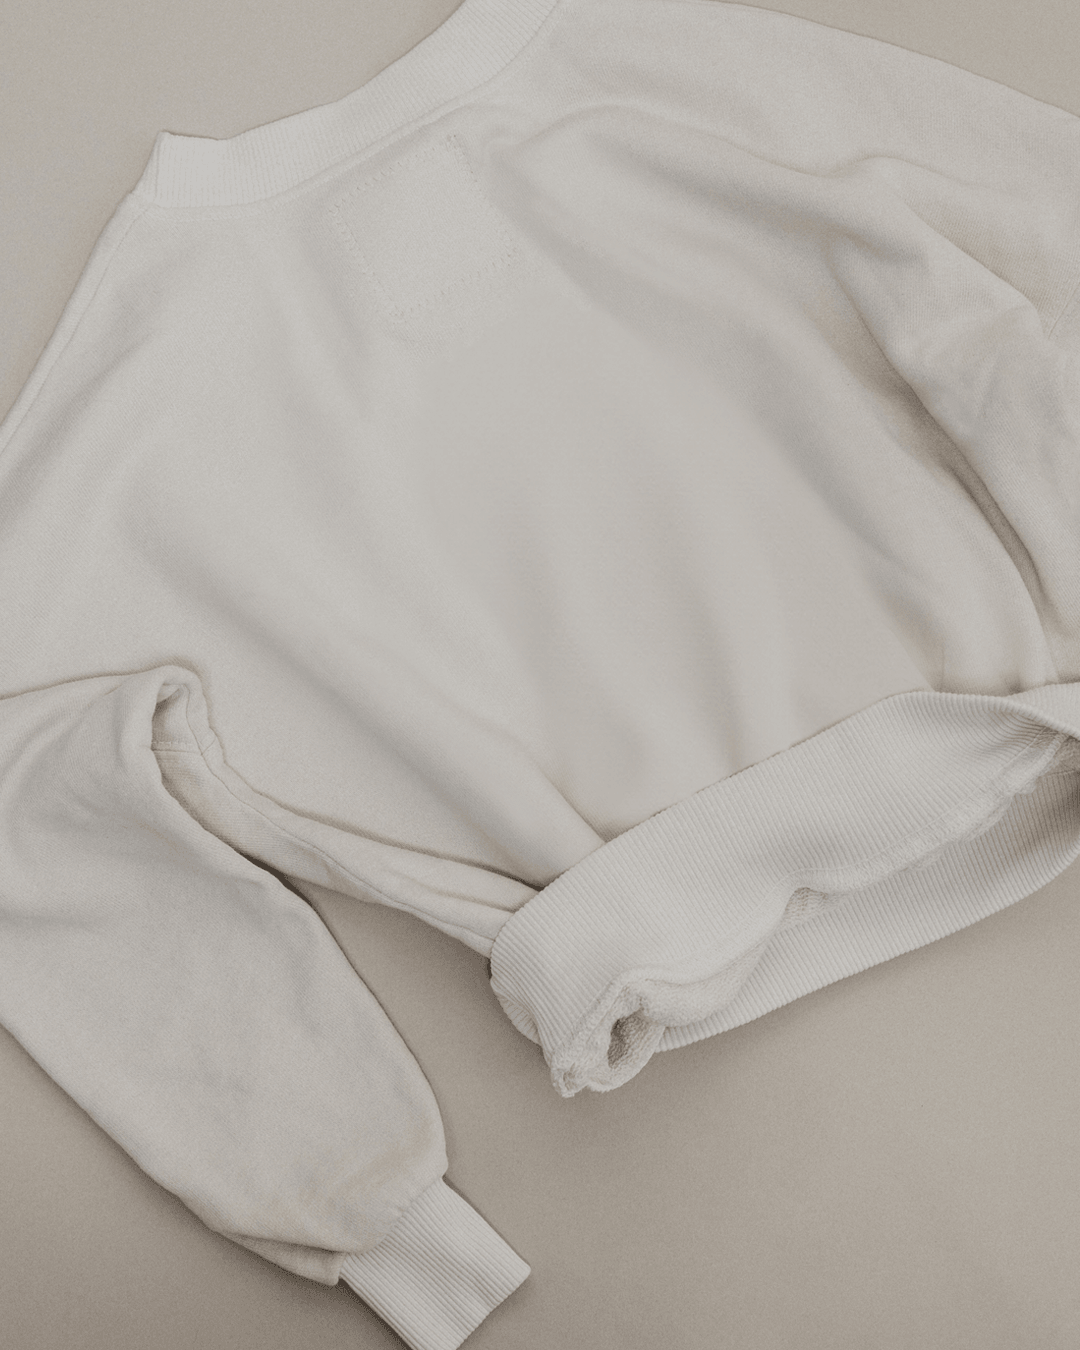 Staple Sweatshirt - positionless by Kristen Ledlow